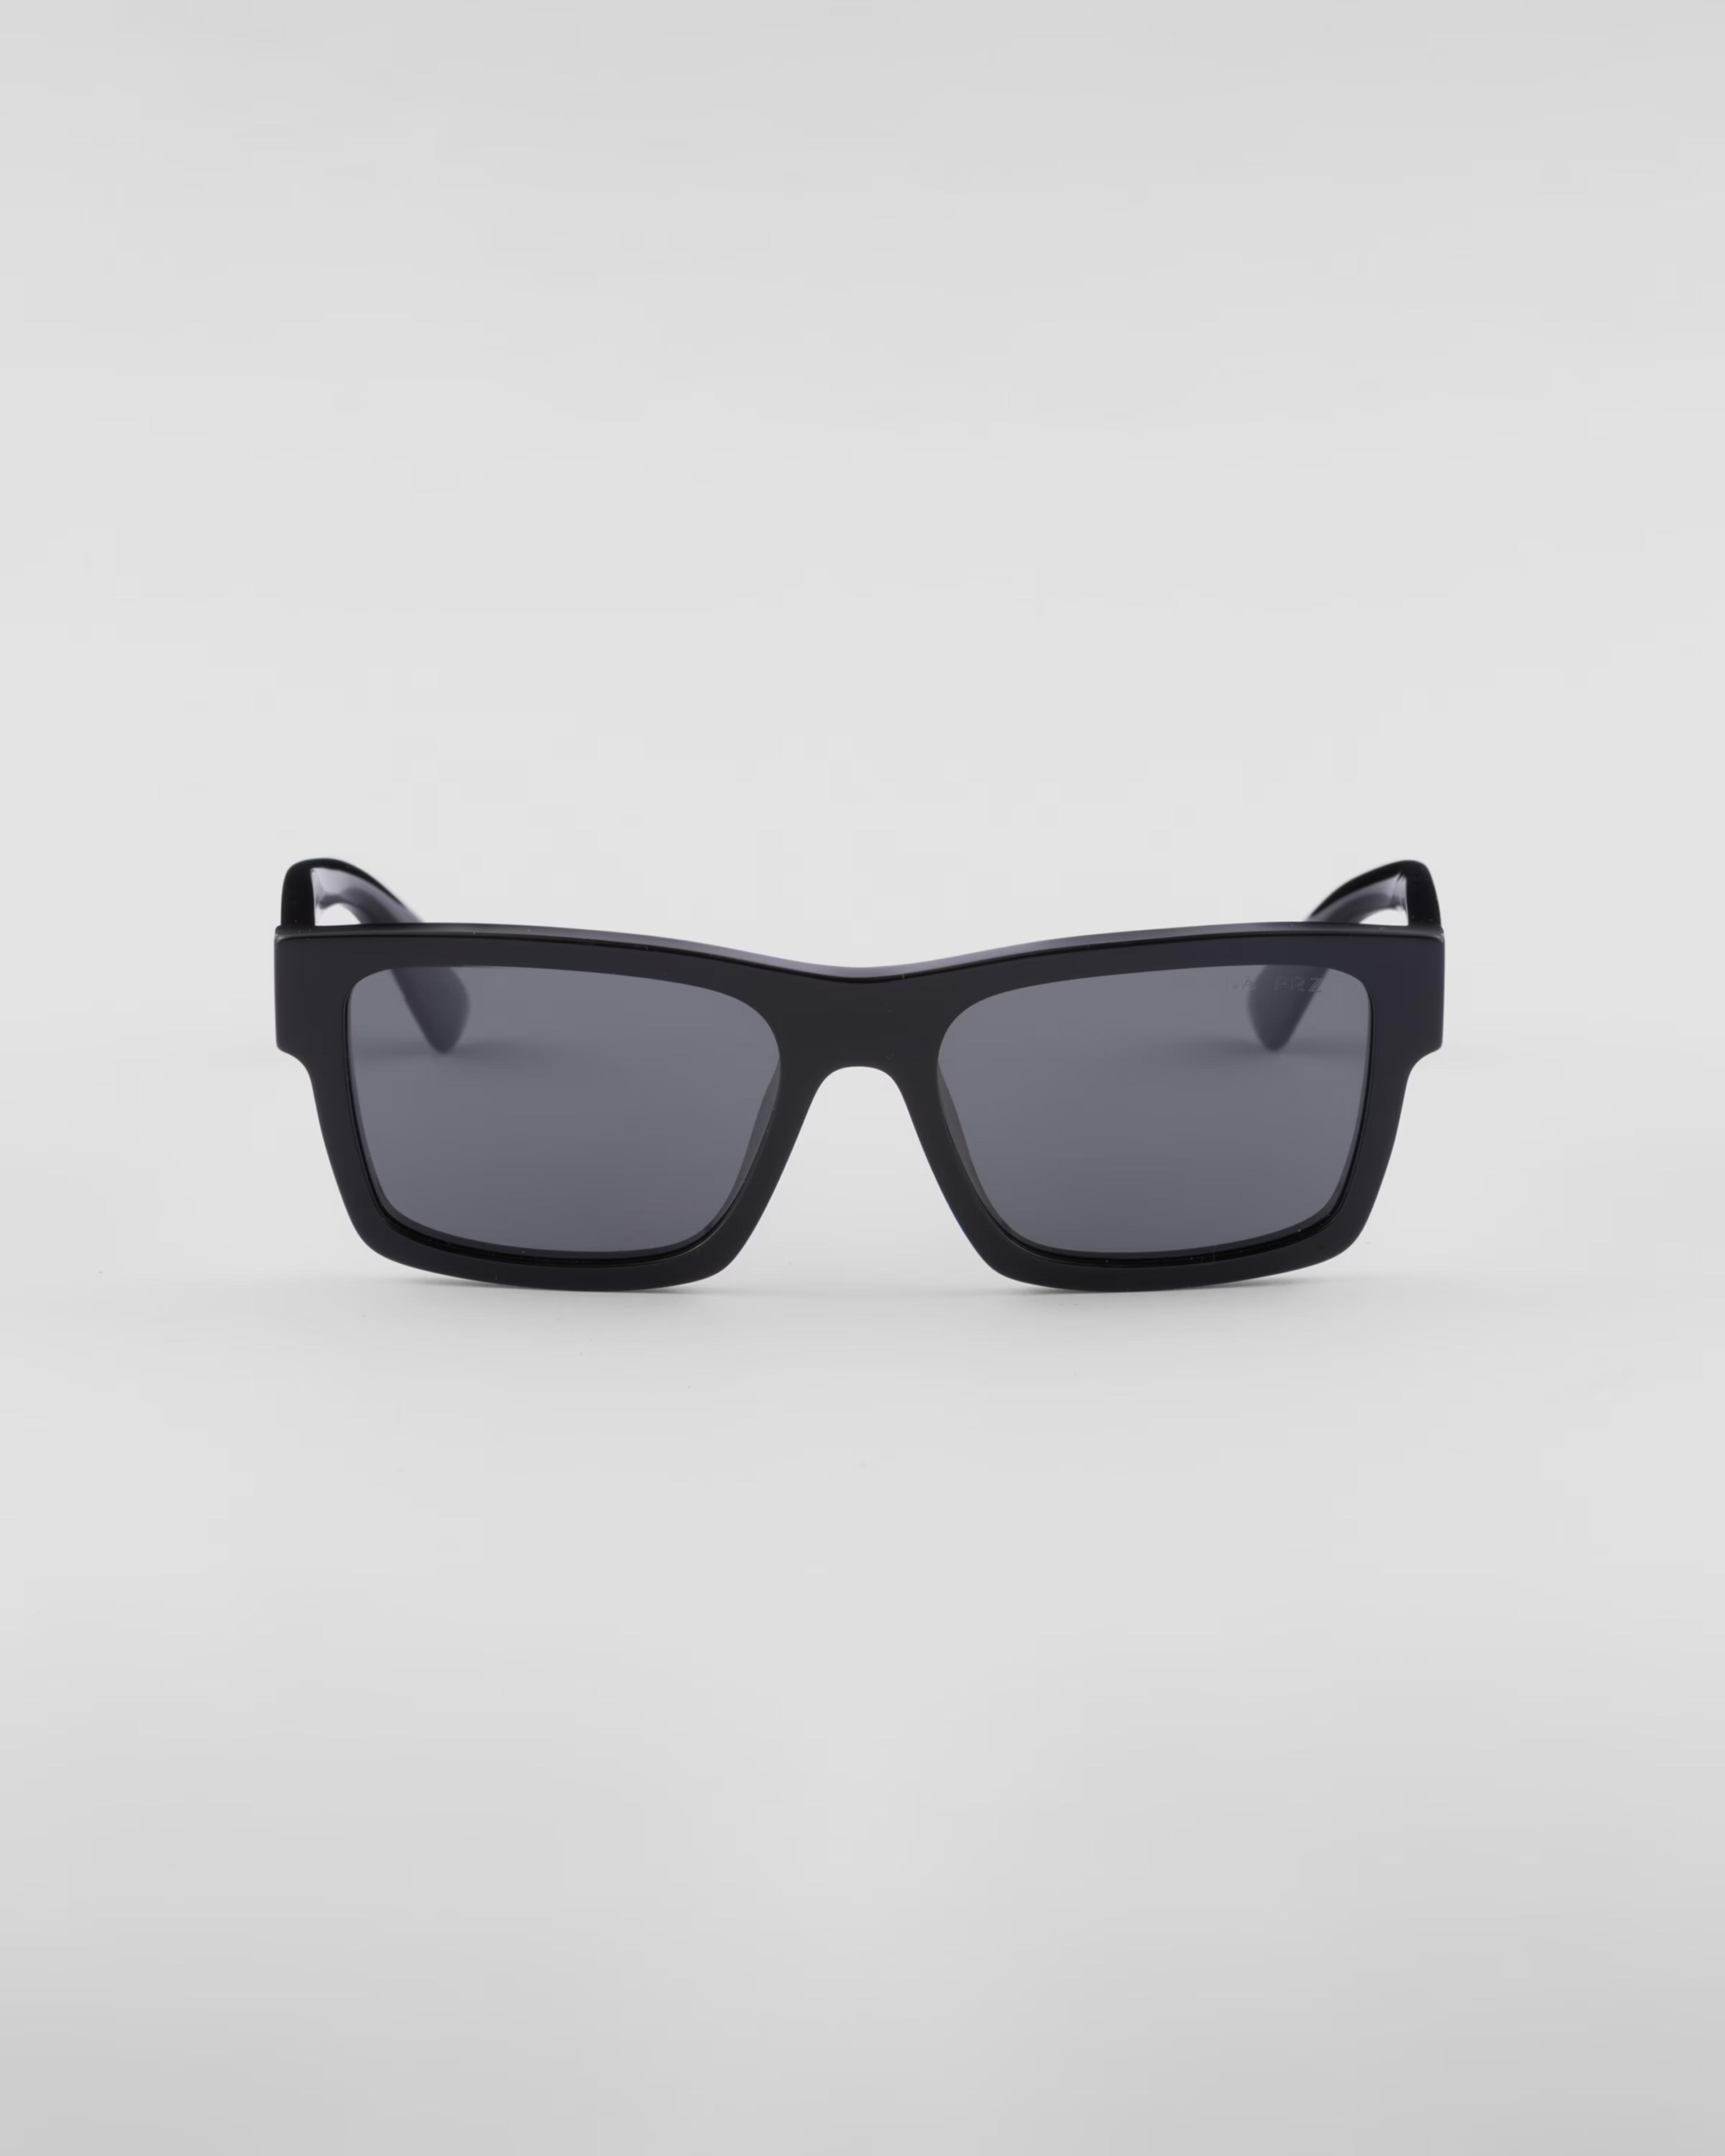 Slate Gray Lenses Sunglasses With Iconic Metal Plaque | PRADA